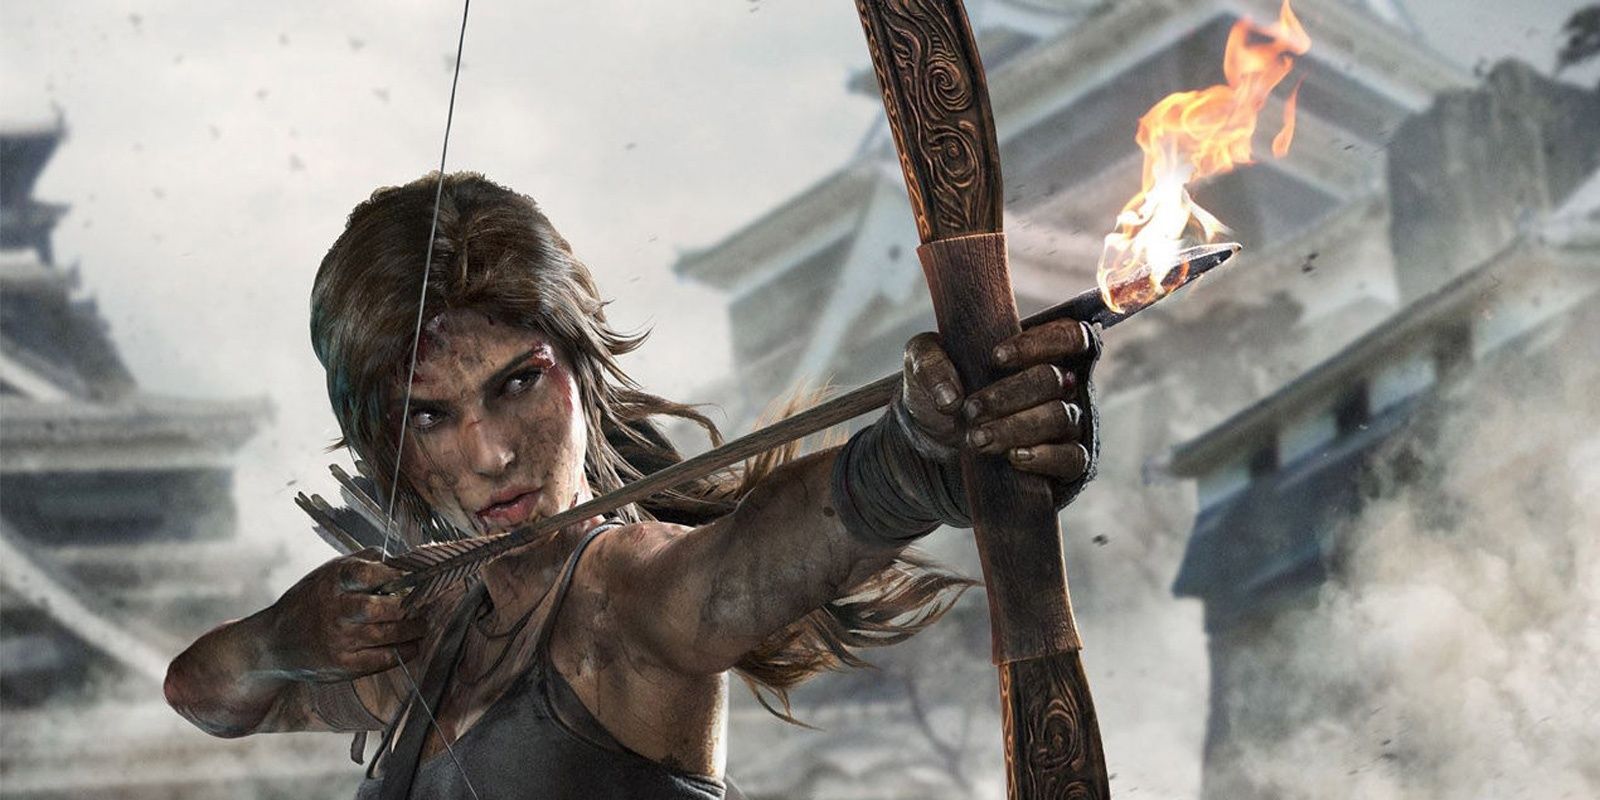 Lara Croft with a flaming arrow